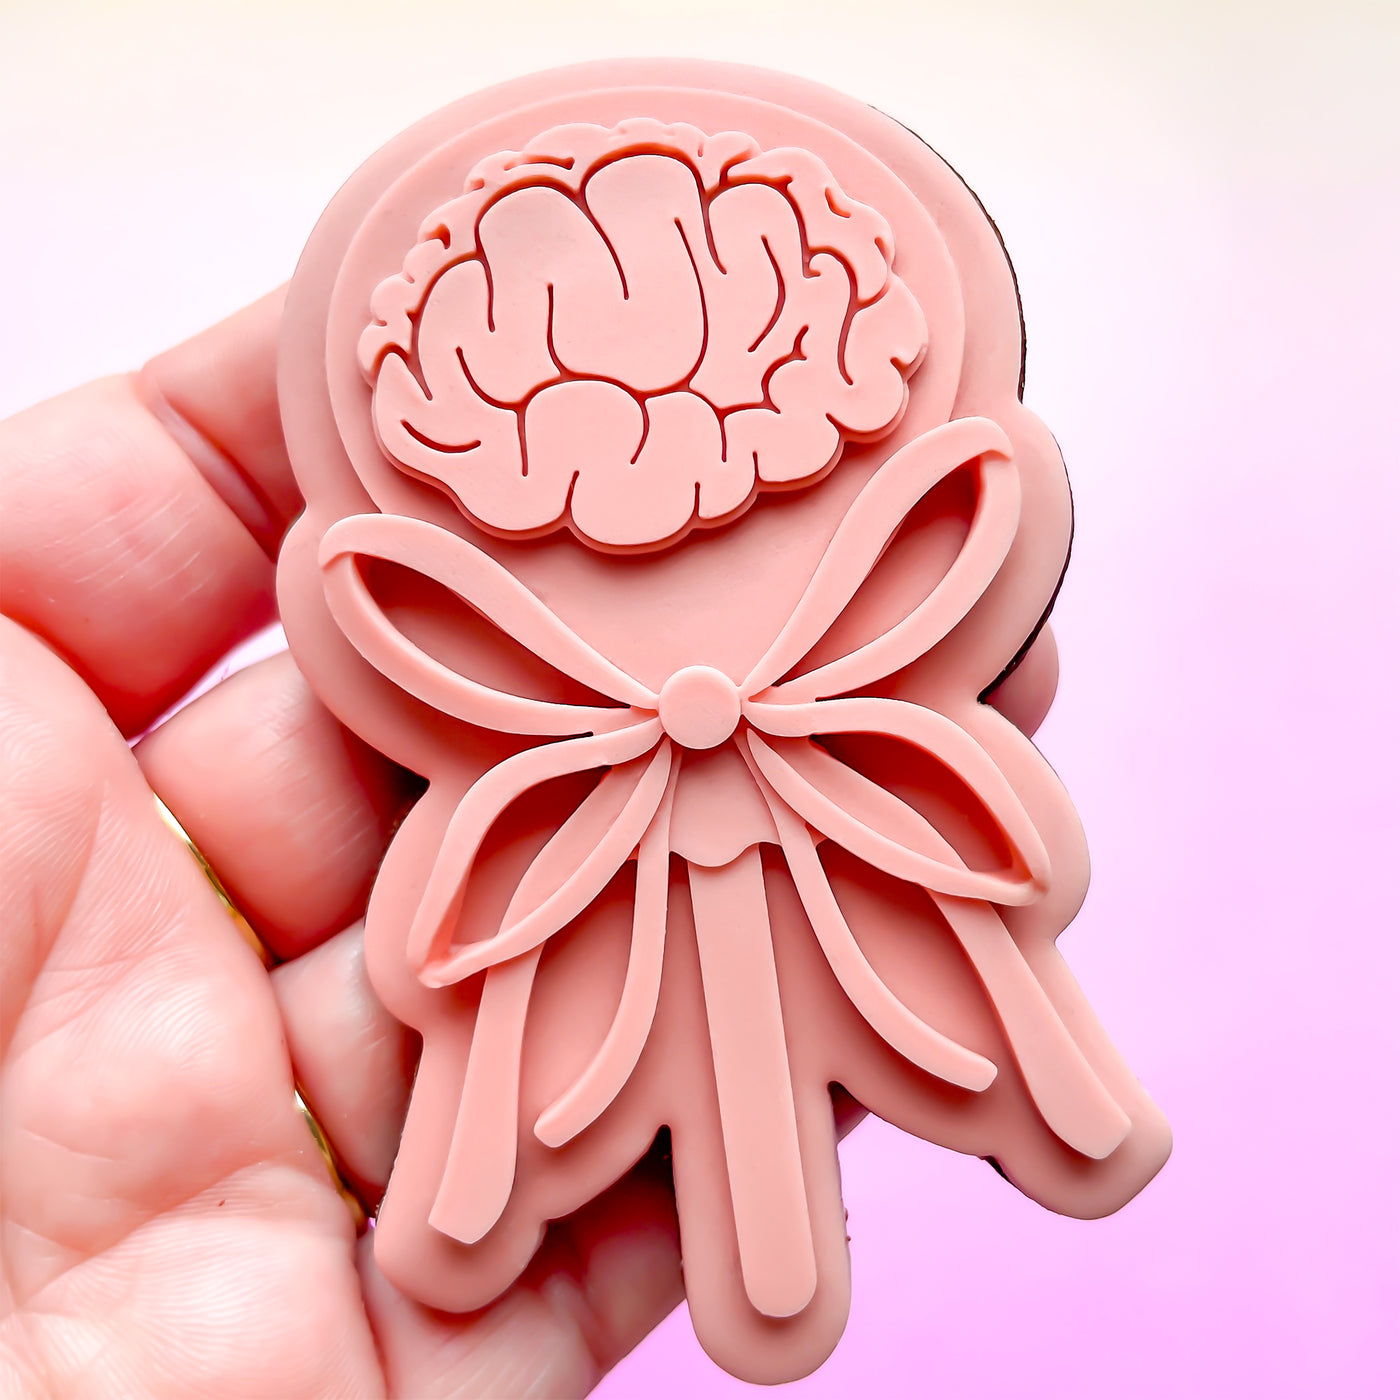 Brain Lollipop With Bow